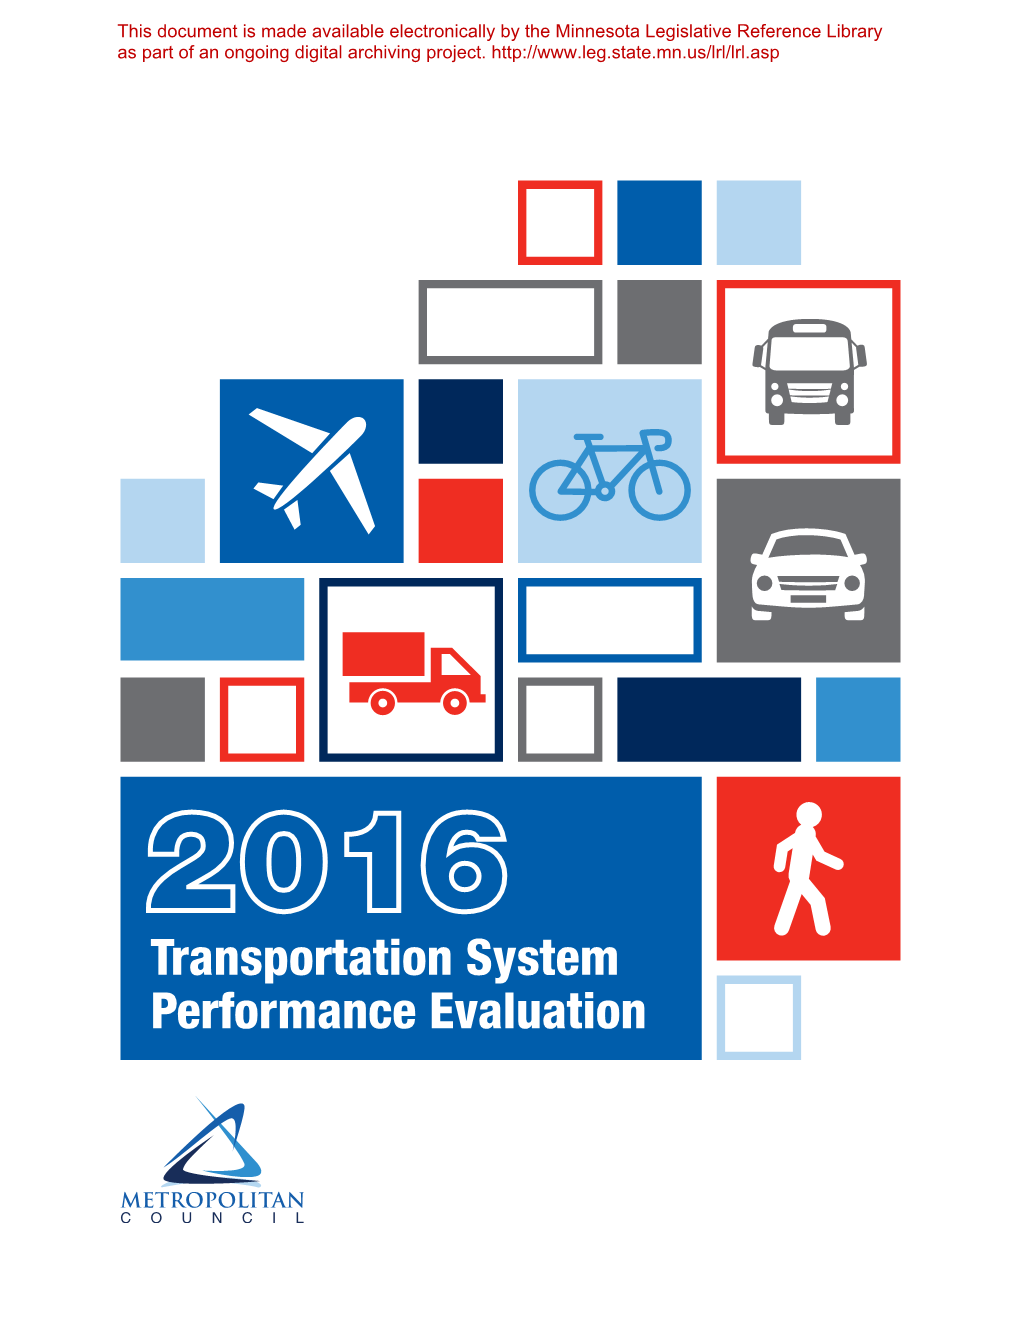 2016 Transportation System Performance Evaluation